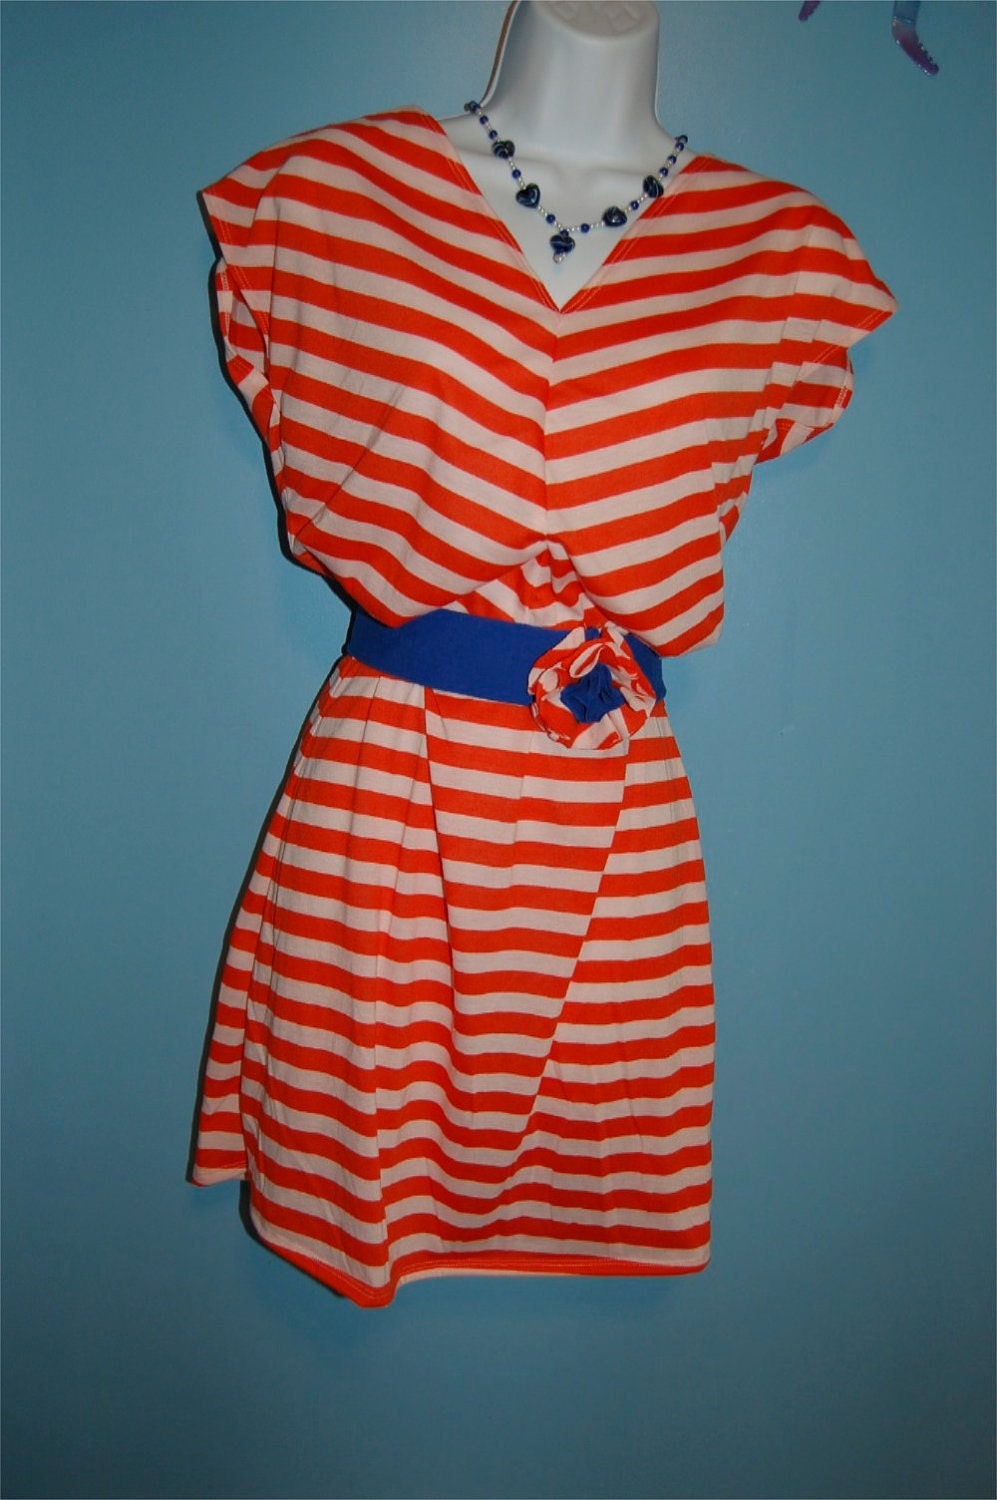 Private Listing for Jane - Orange Flower Dress and Orange Striped Dress